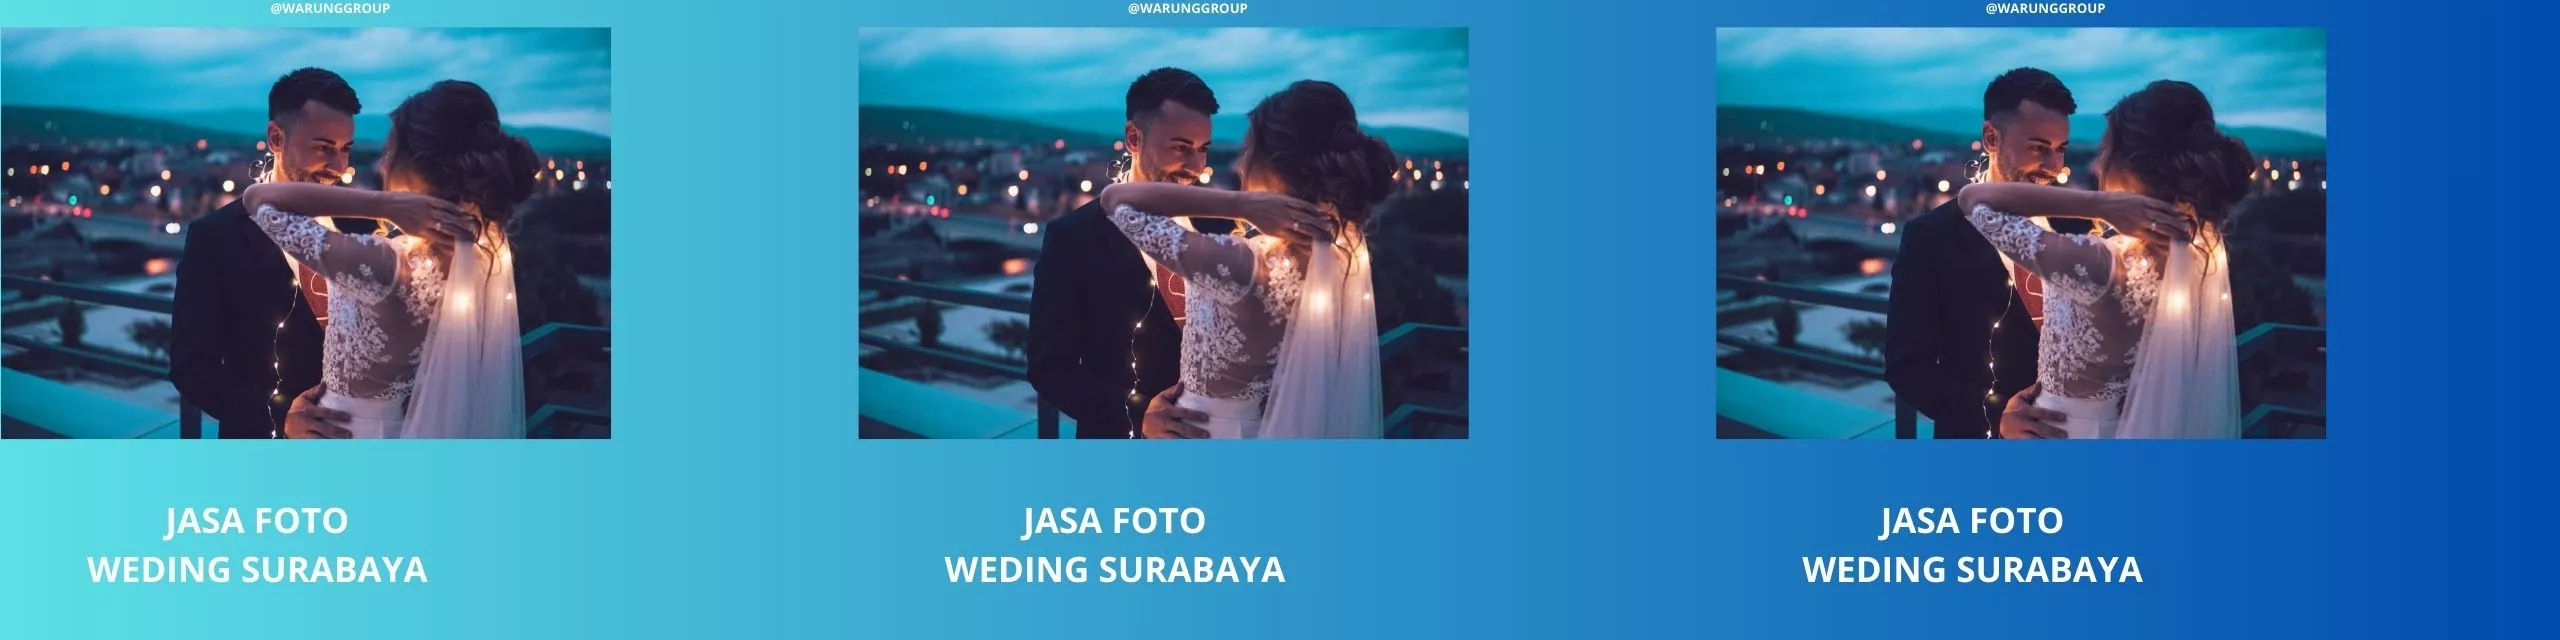 Jasa Foto Wedding Surabaya